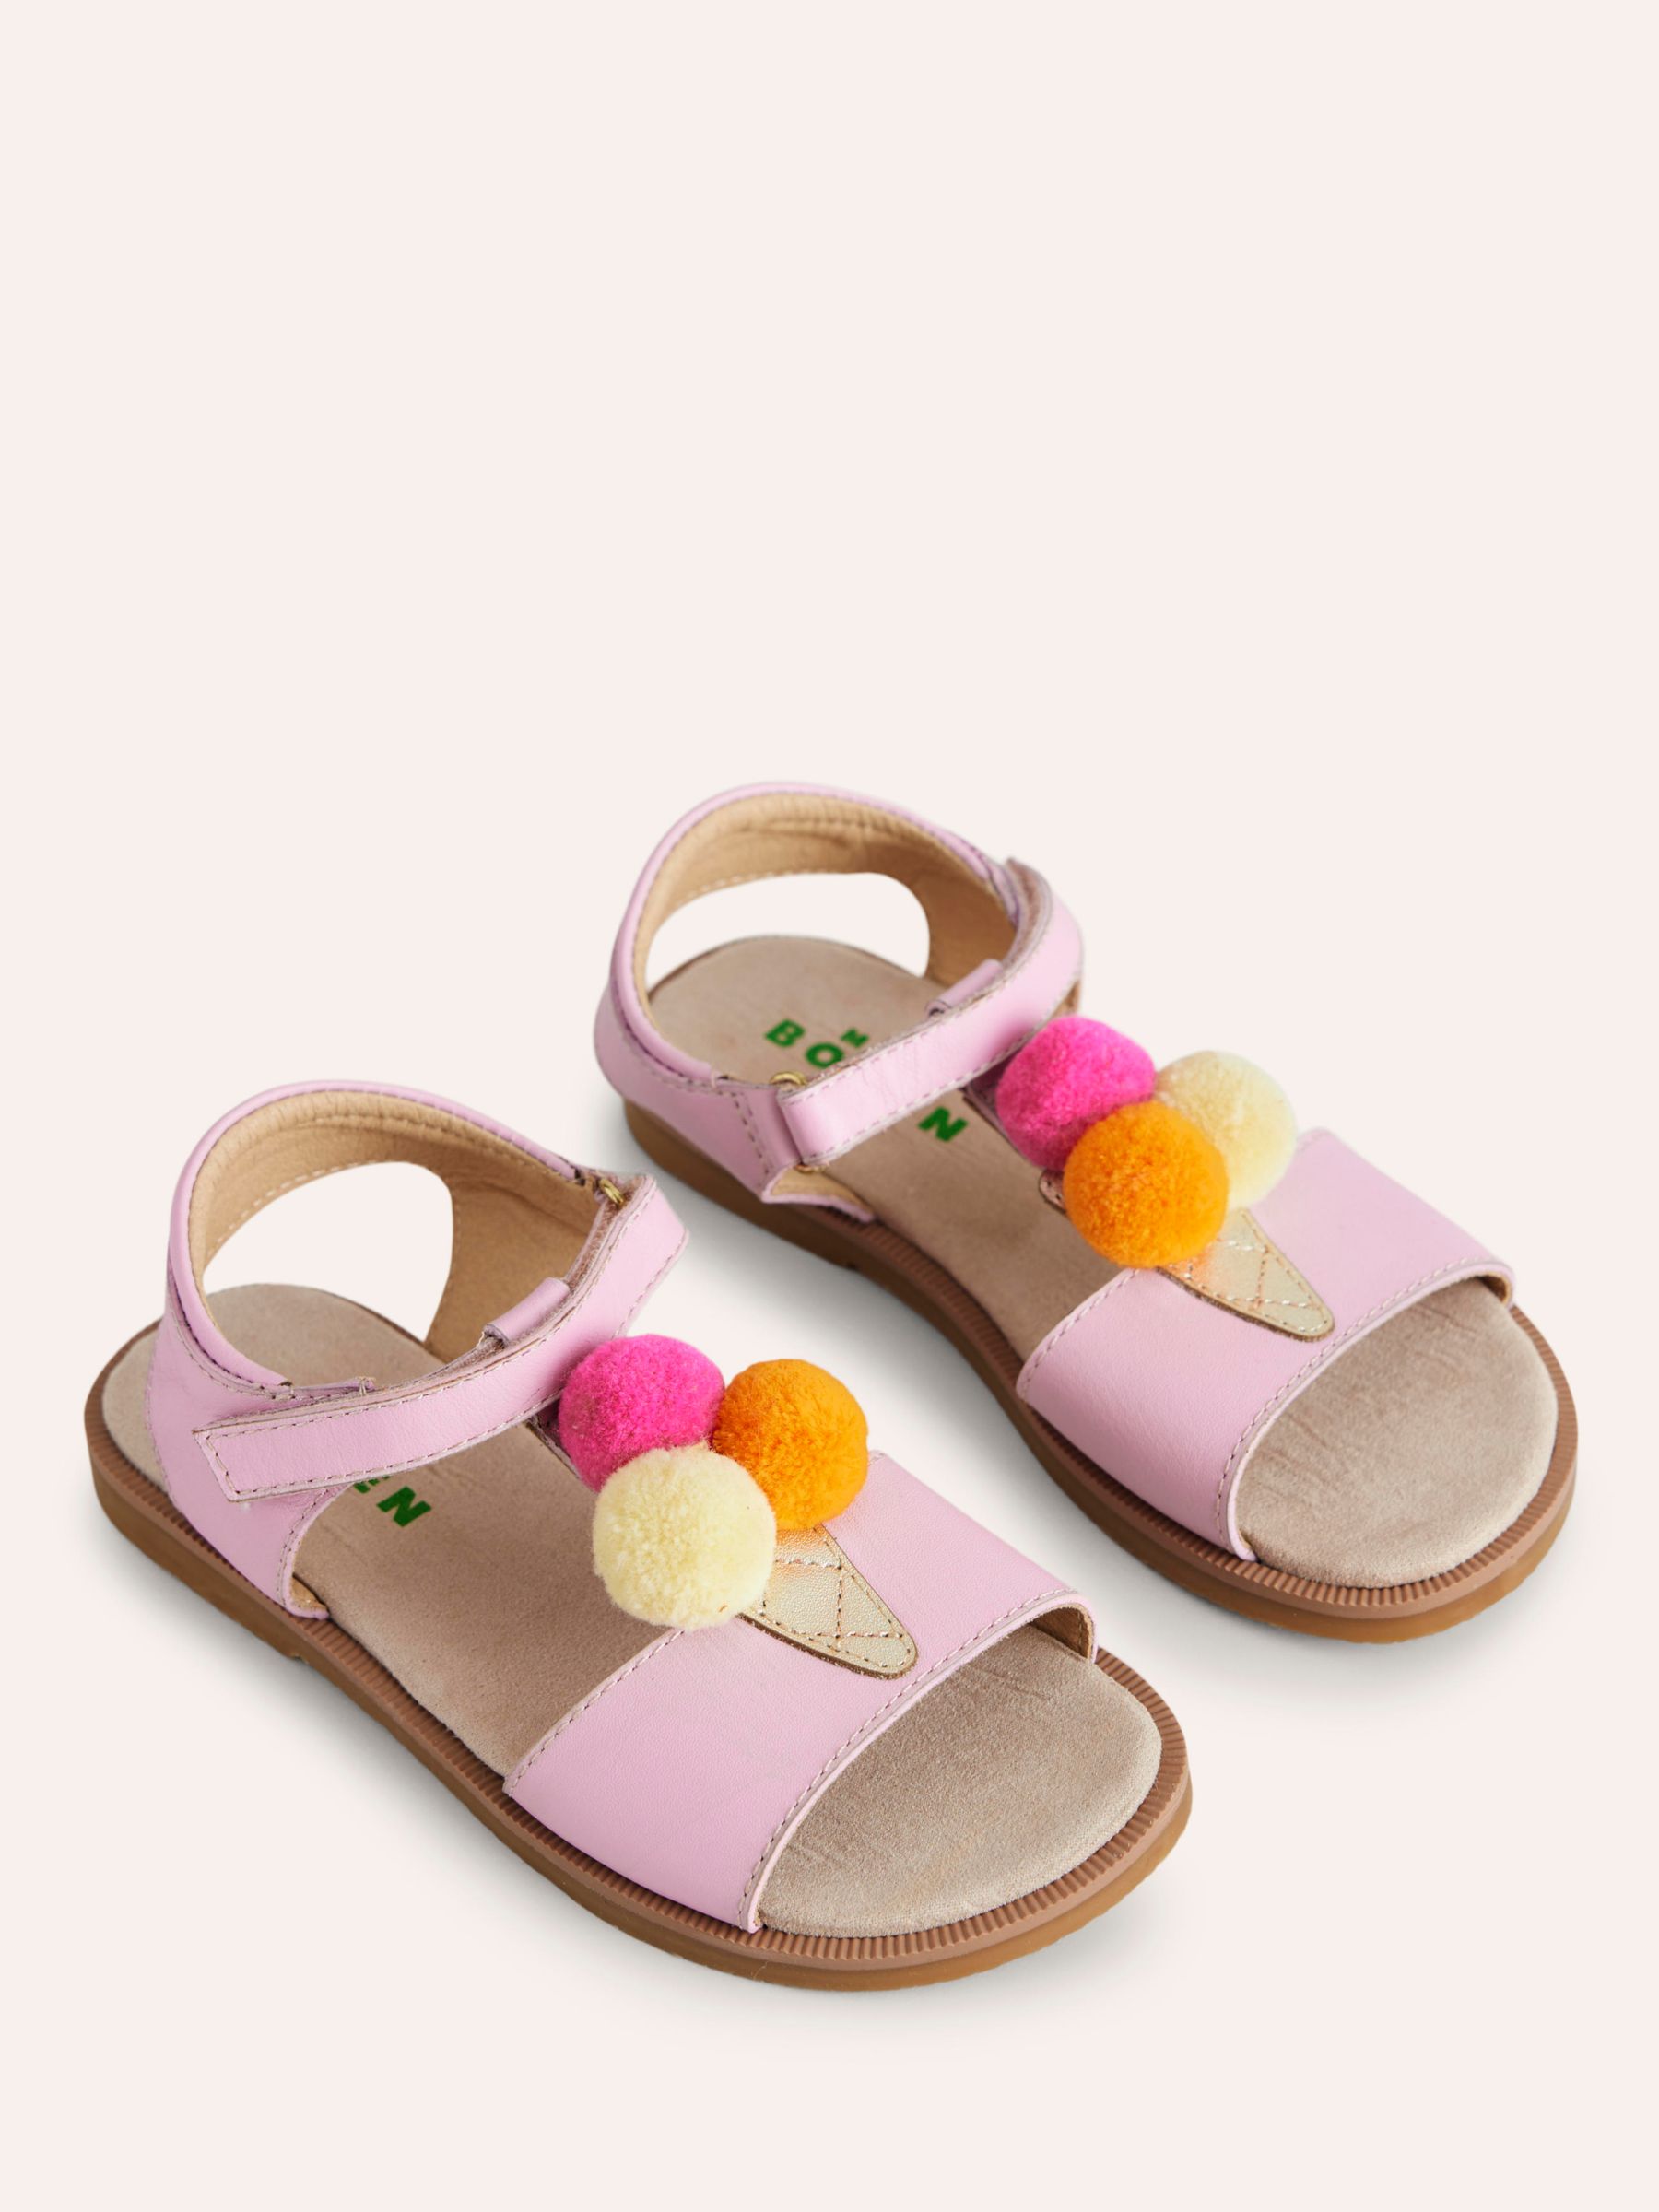 Mini Boden Kids' Leather Fun Pom Pom Ice Cream Sandals, Pink/Multi, 13 Jnr